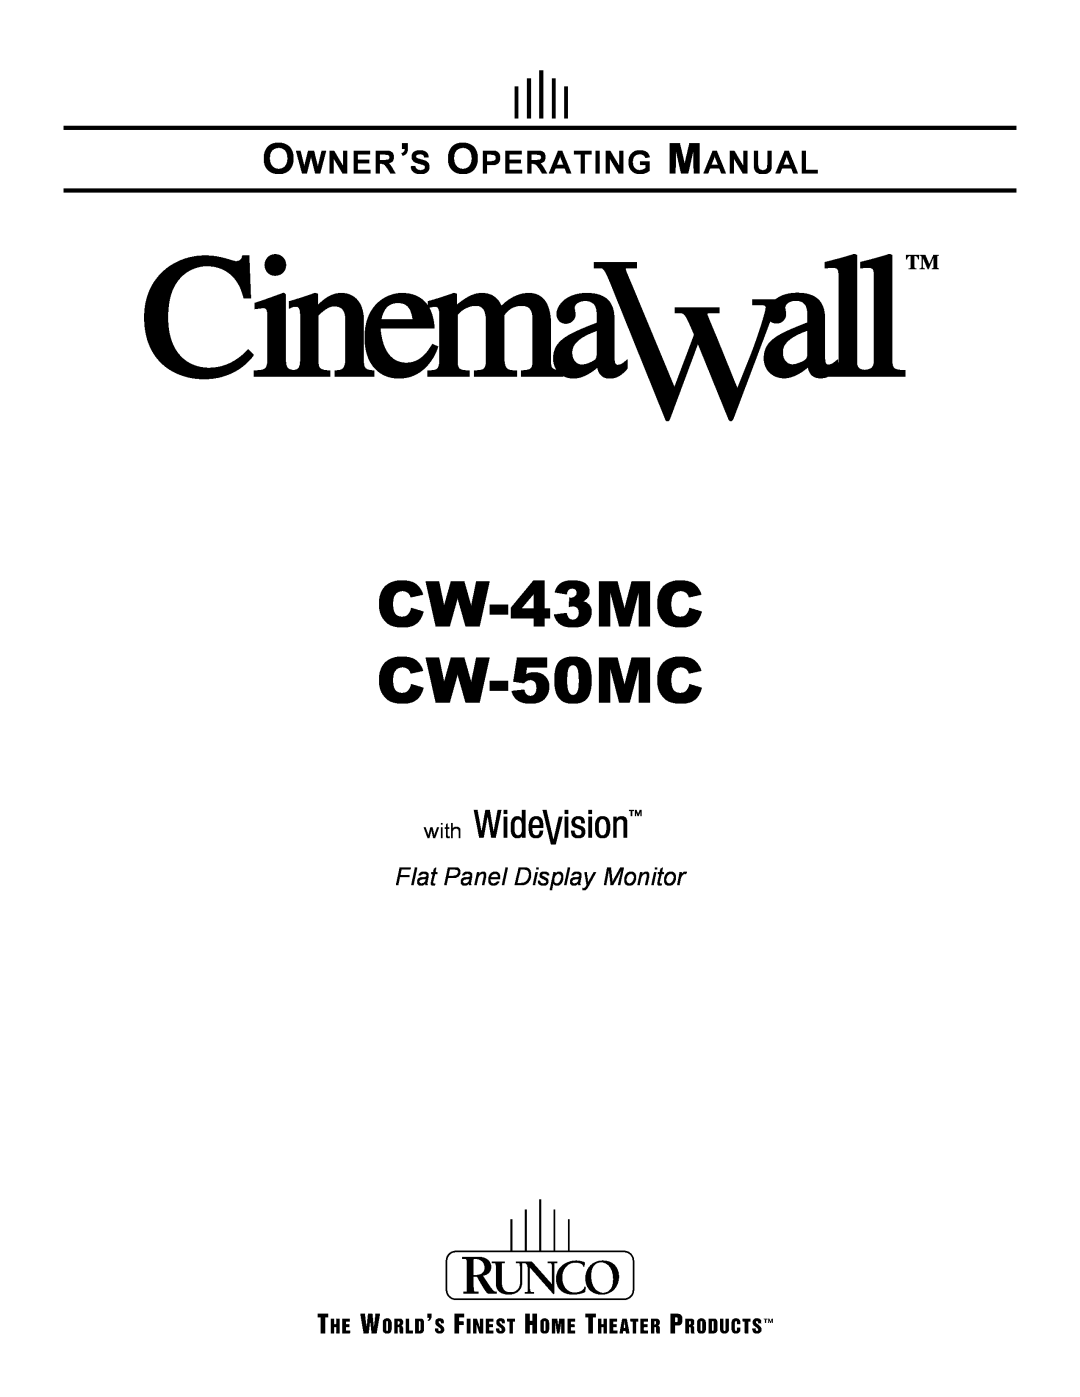 Runco manual with, CW-43MC CW-50MC, Owner’S Operating Manual, Flat Panel Display Monitor 